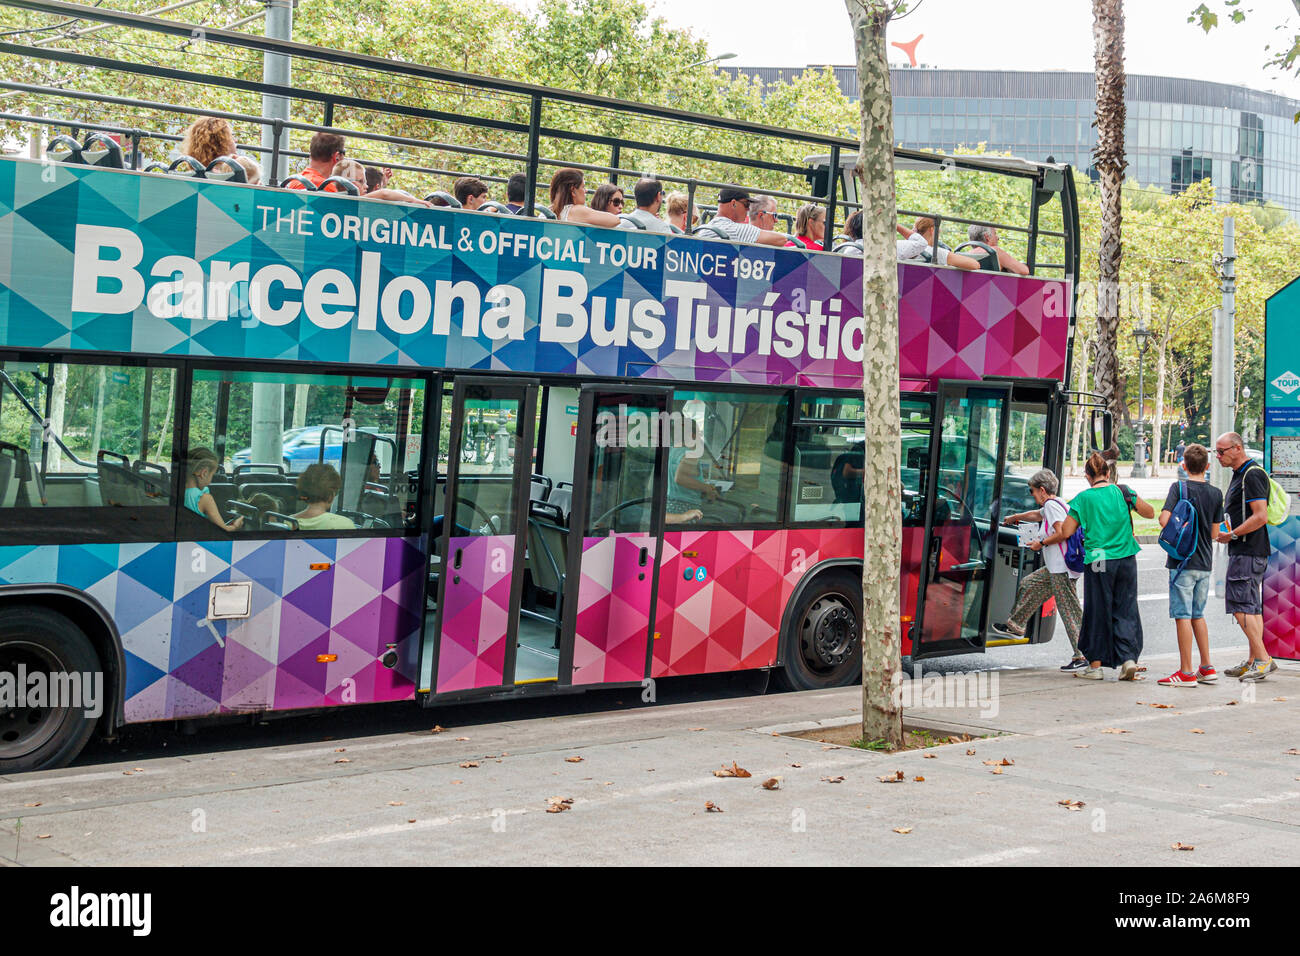 Barcelona Spain,Catalonia Les Corts,Avinguda Diagonal,Bus Turistic,double decker sightseeing bus,man,woman,boarding,tour passengers,ES190901007 Stock Photo